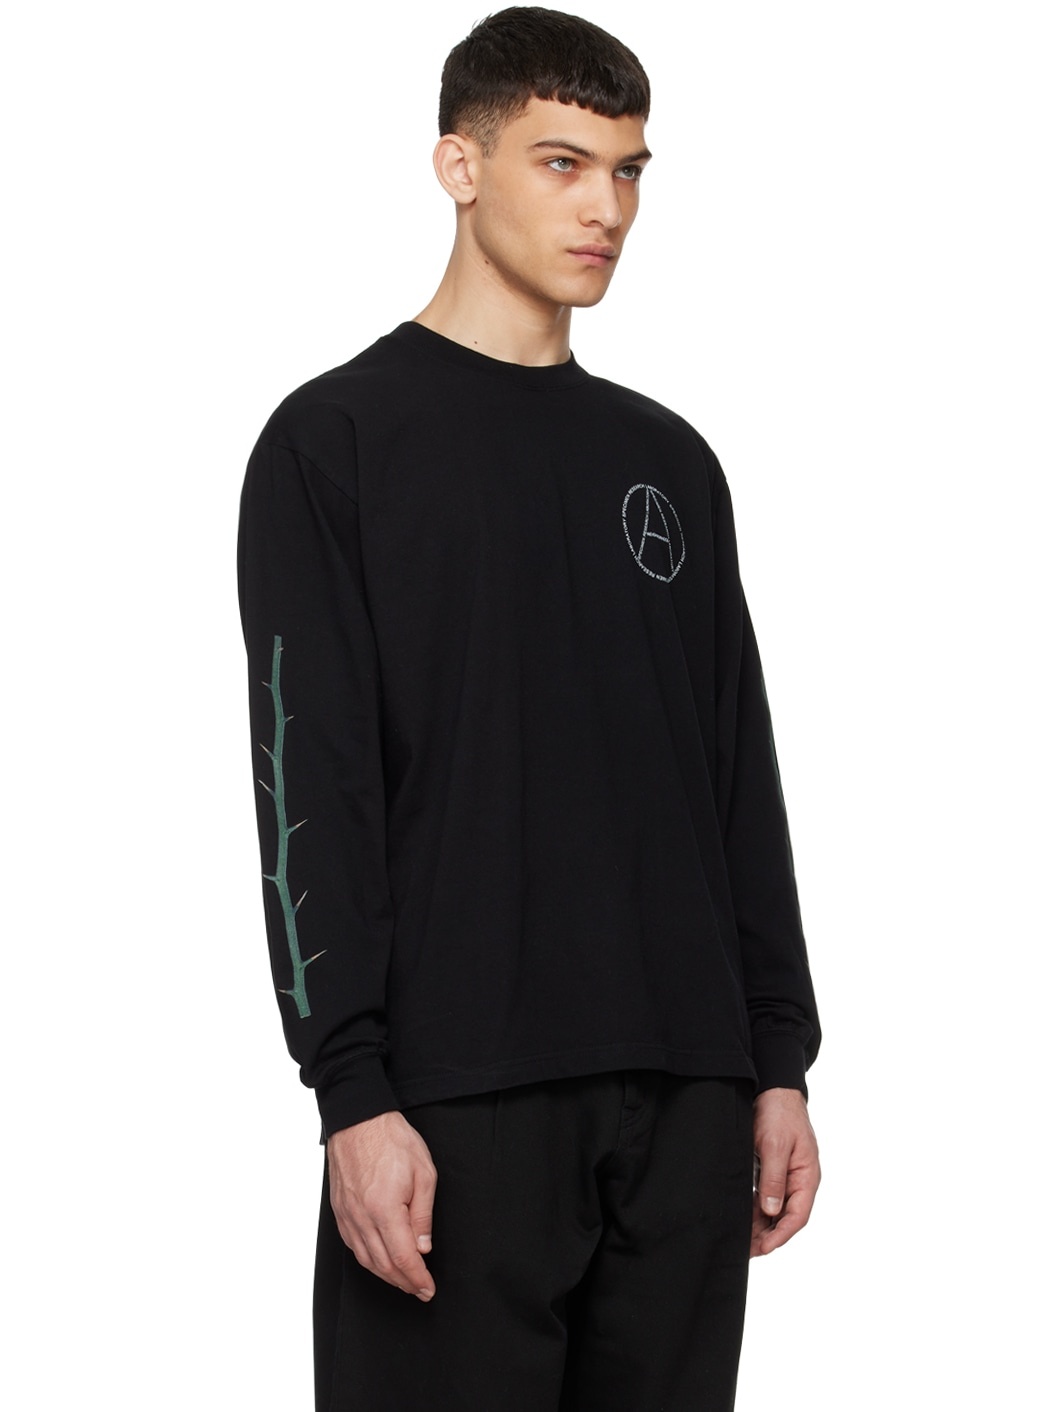 Black Printed Long Sleeve T-Shirt - 2